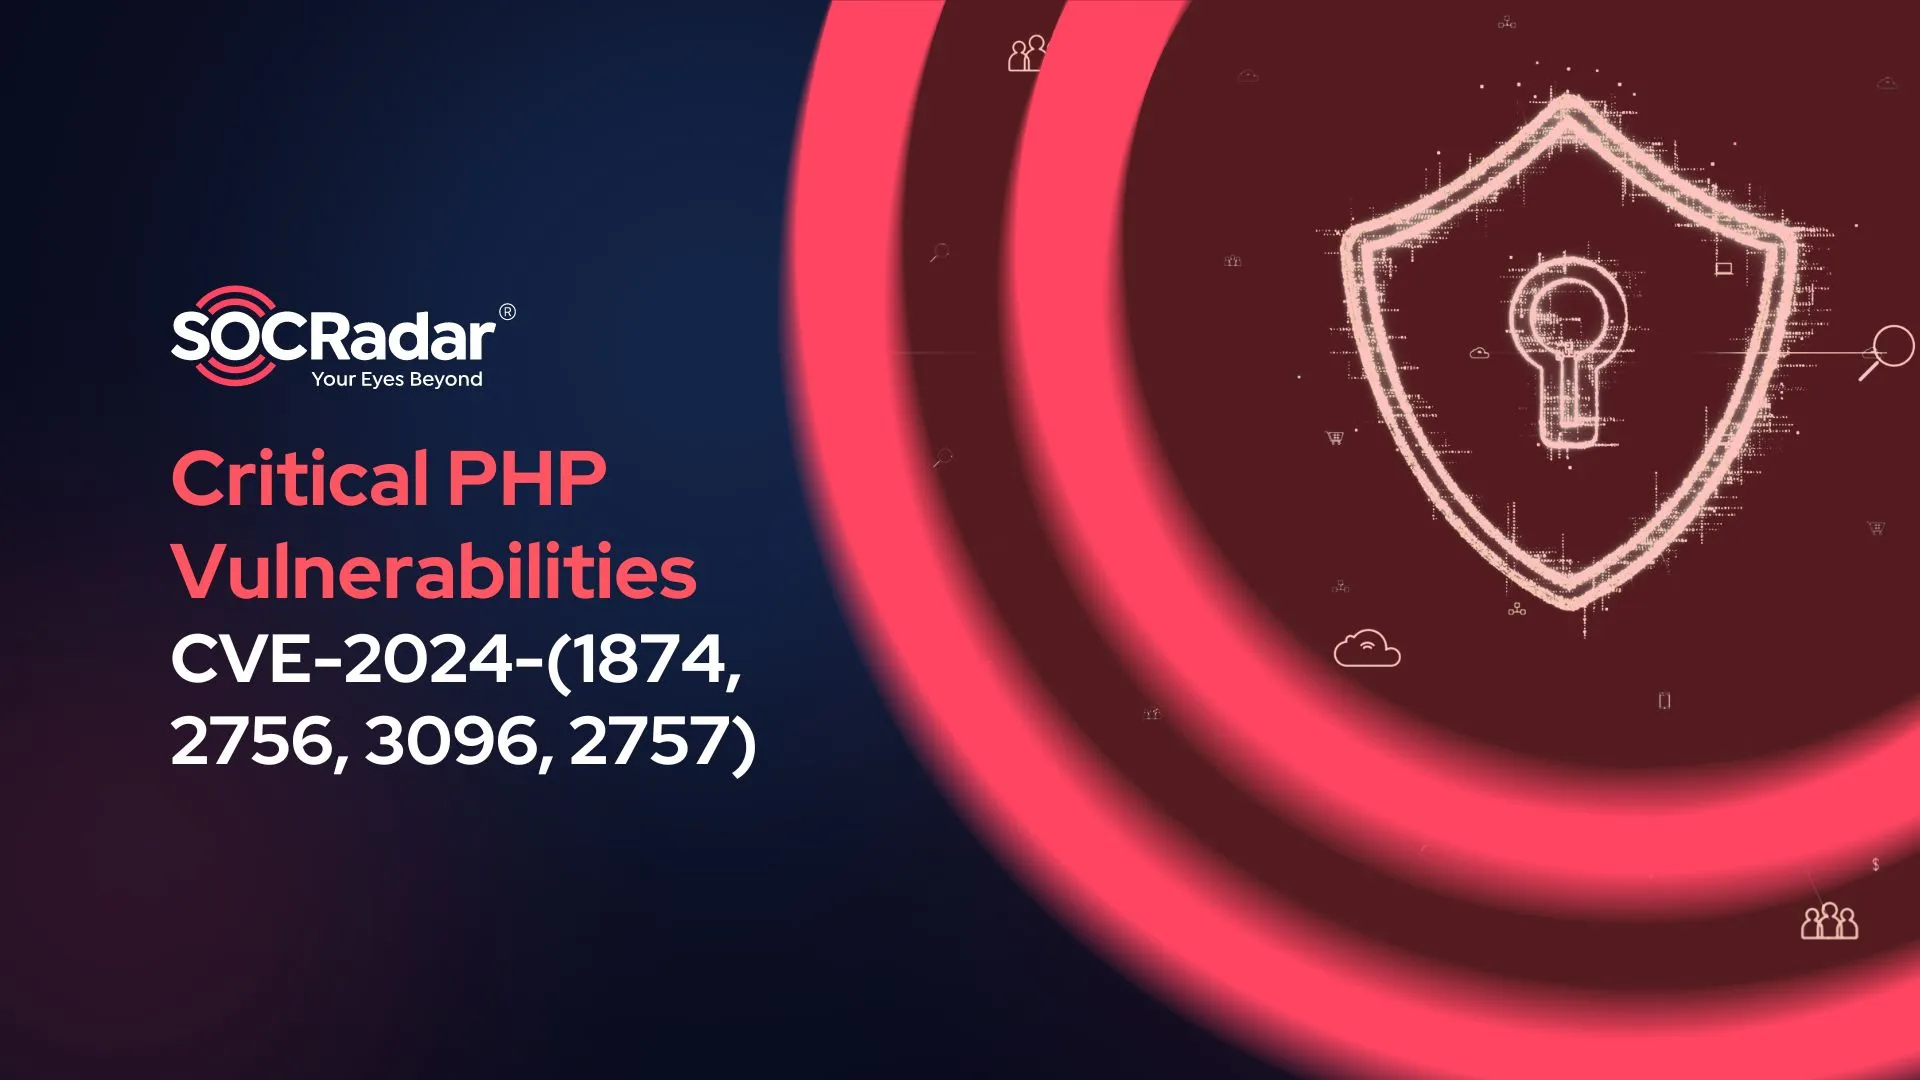 SOCRadar® Cyber Intelligence Inc. | Critical PHP Vulnerabilities: Update Now to Prevent Takeovers and Command Injection (CVE-2024-1874, CVE-2024-2756, CVE-2024-3096, CVE-2024-2757)